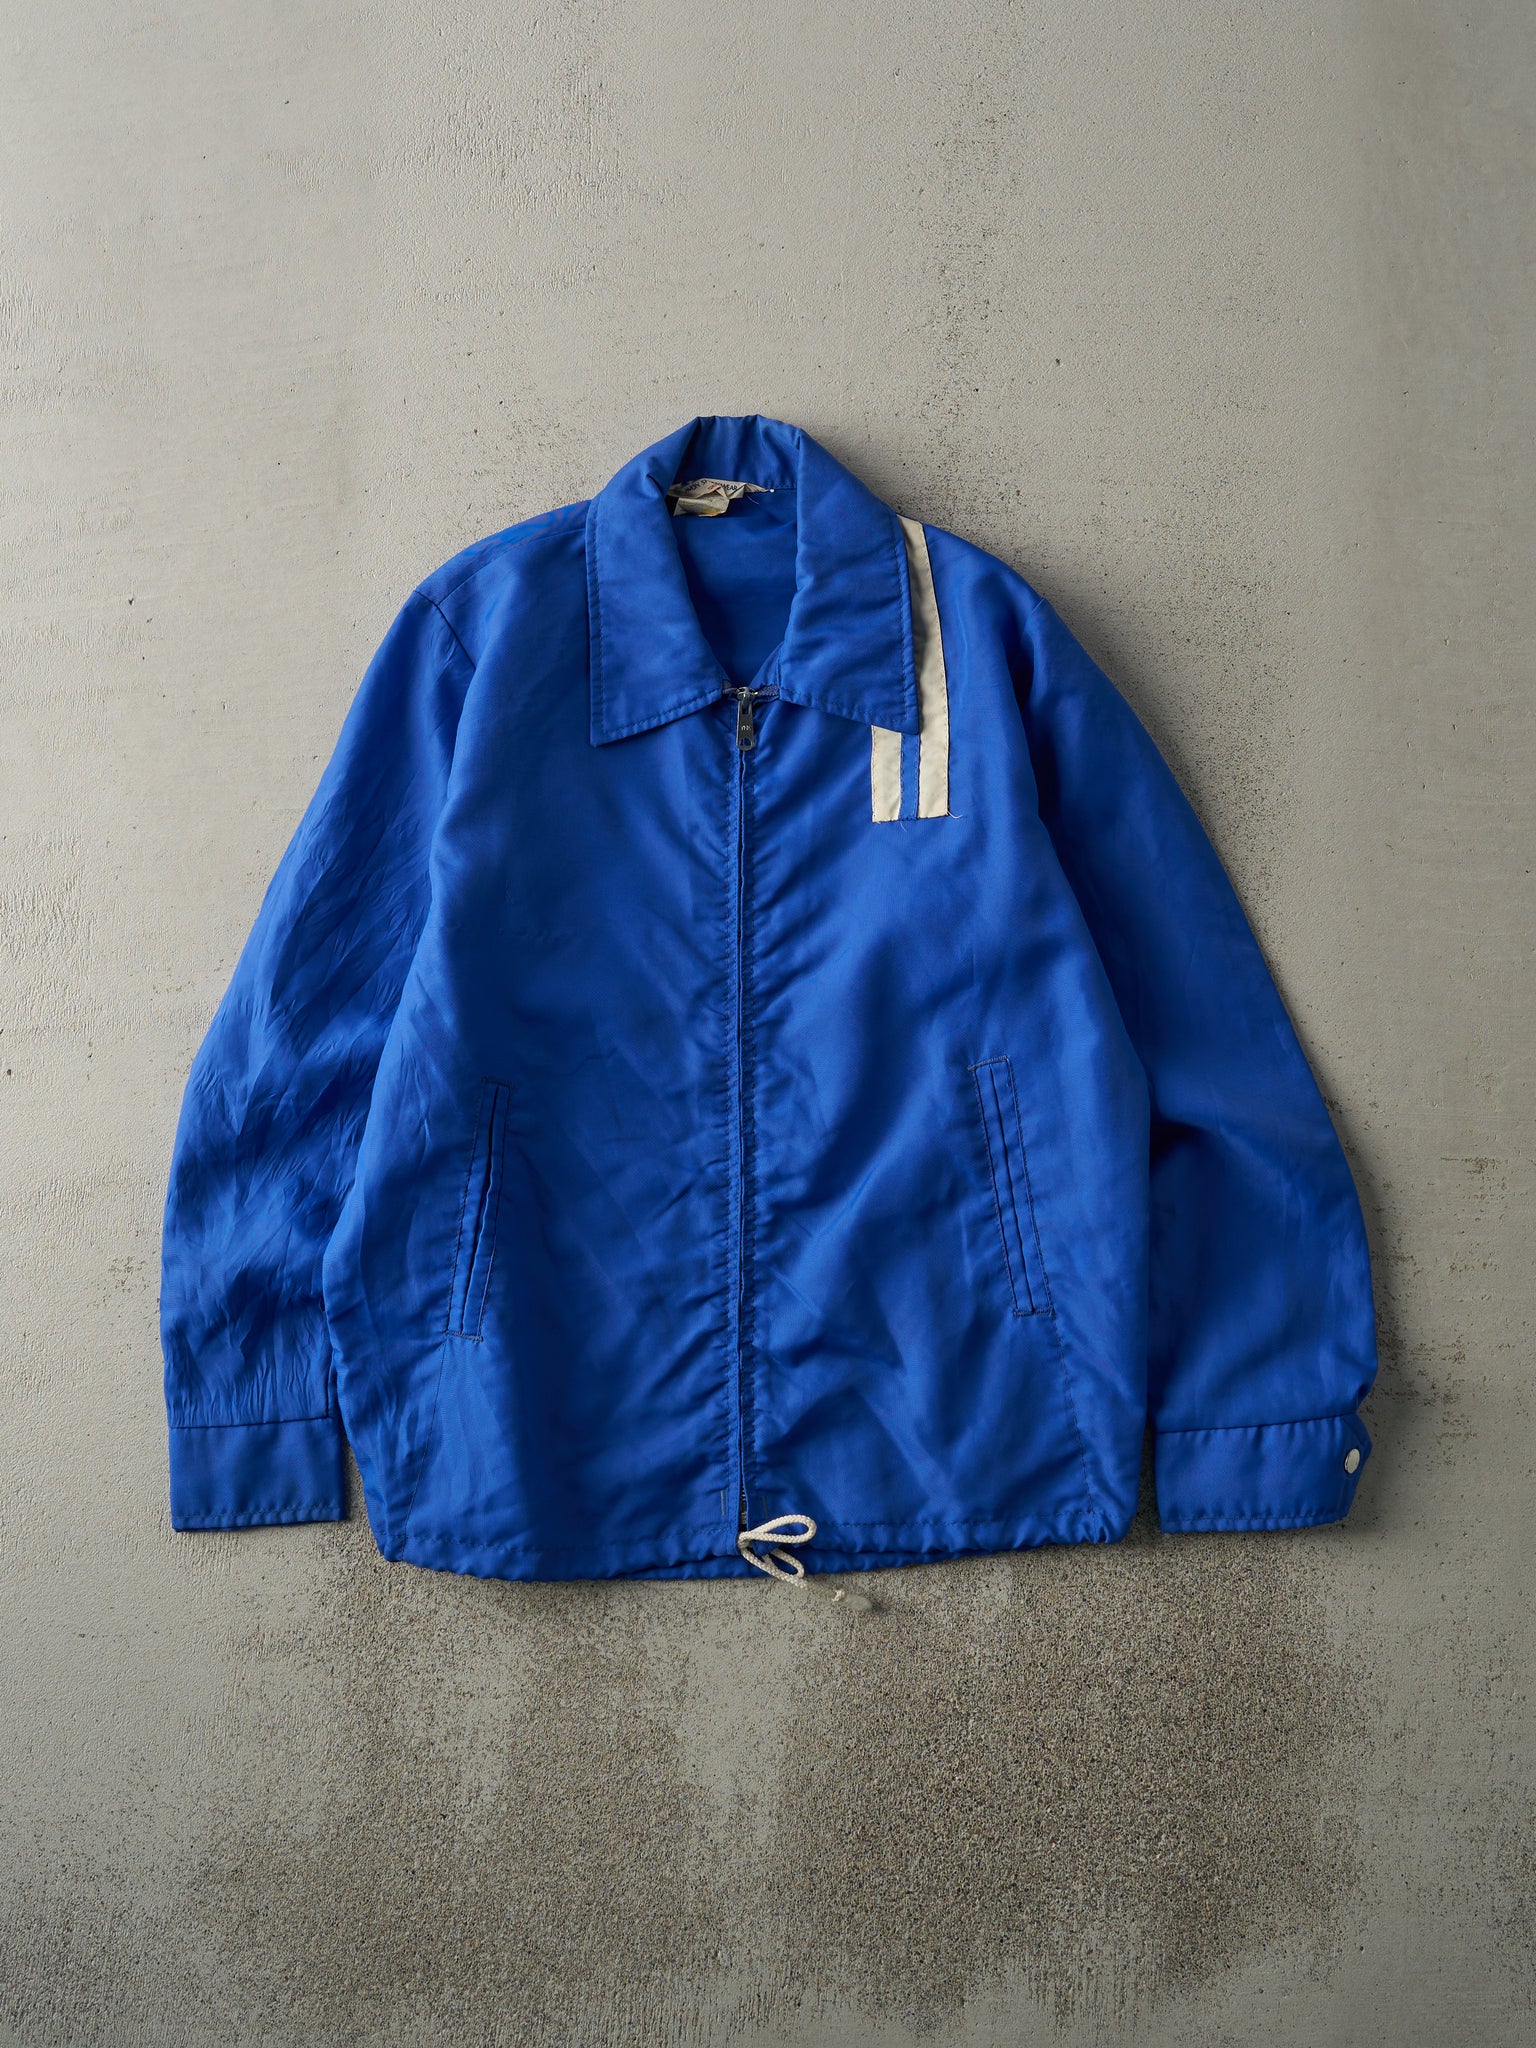 Vintage 70s Blue Striped Nylon Jacket (S)